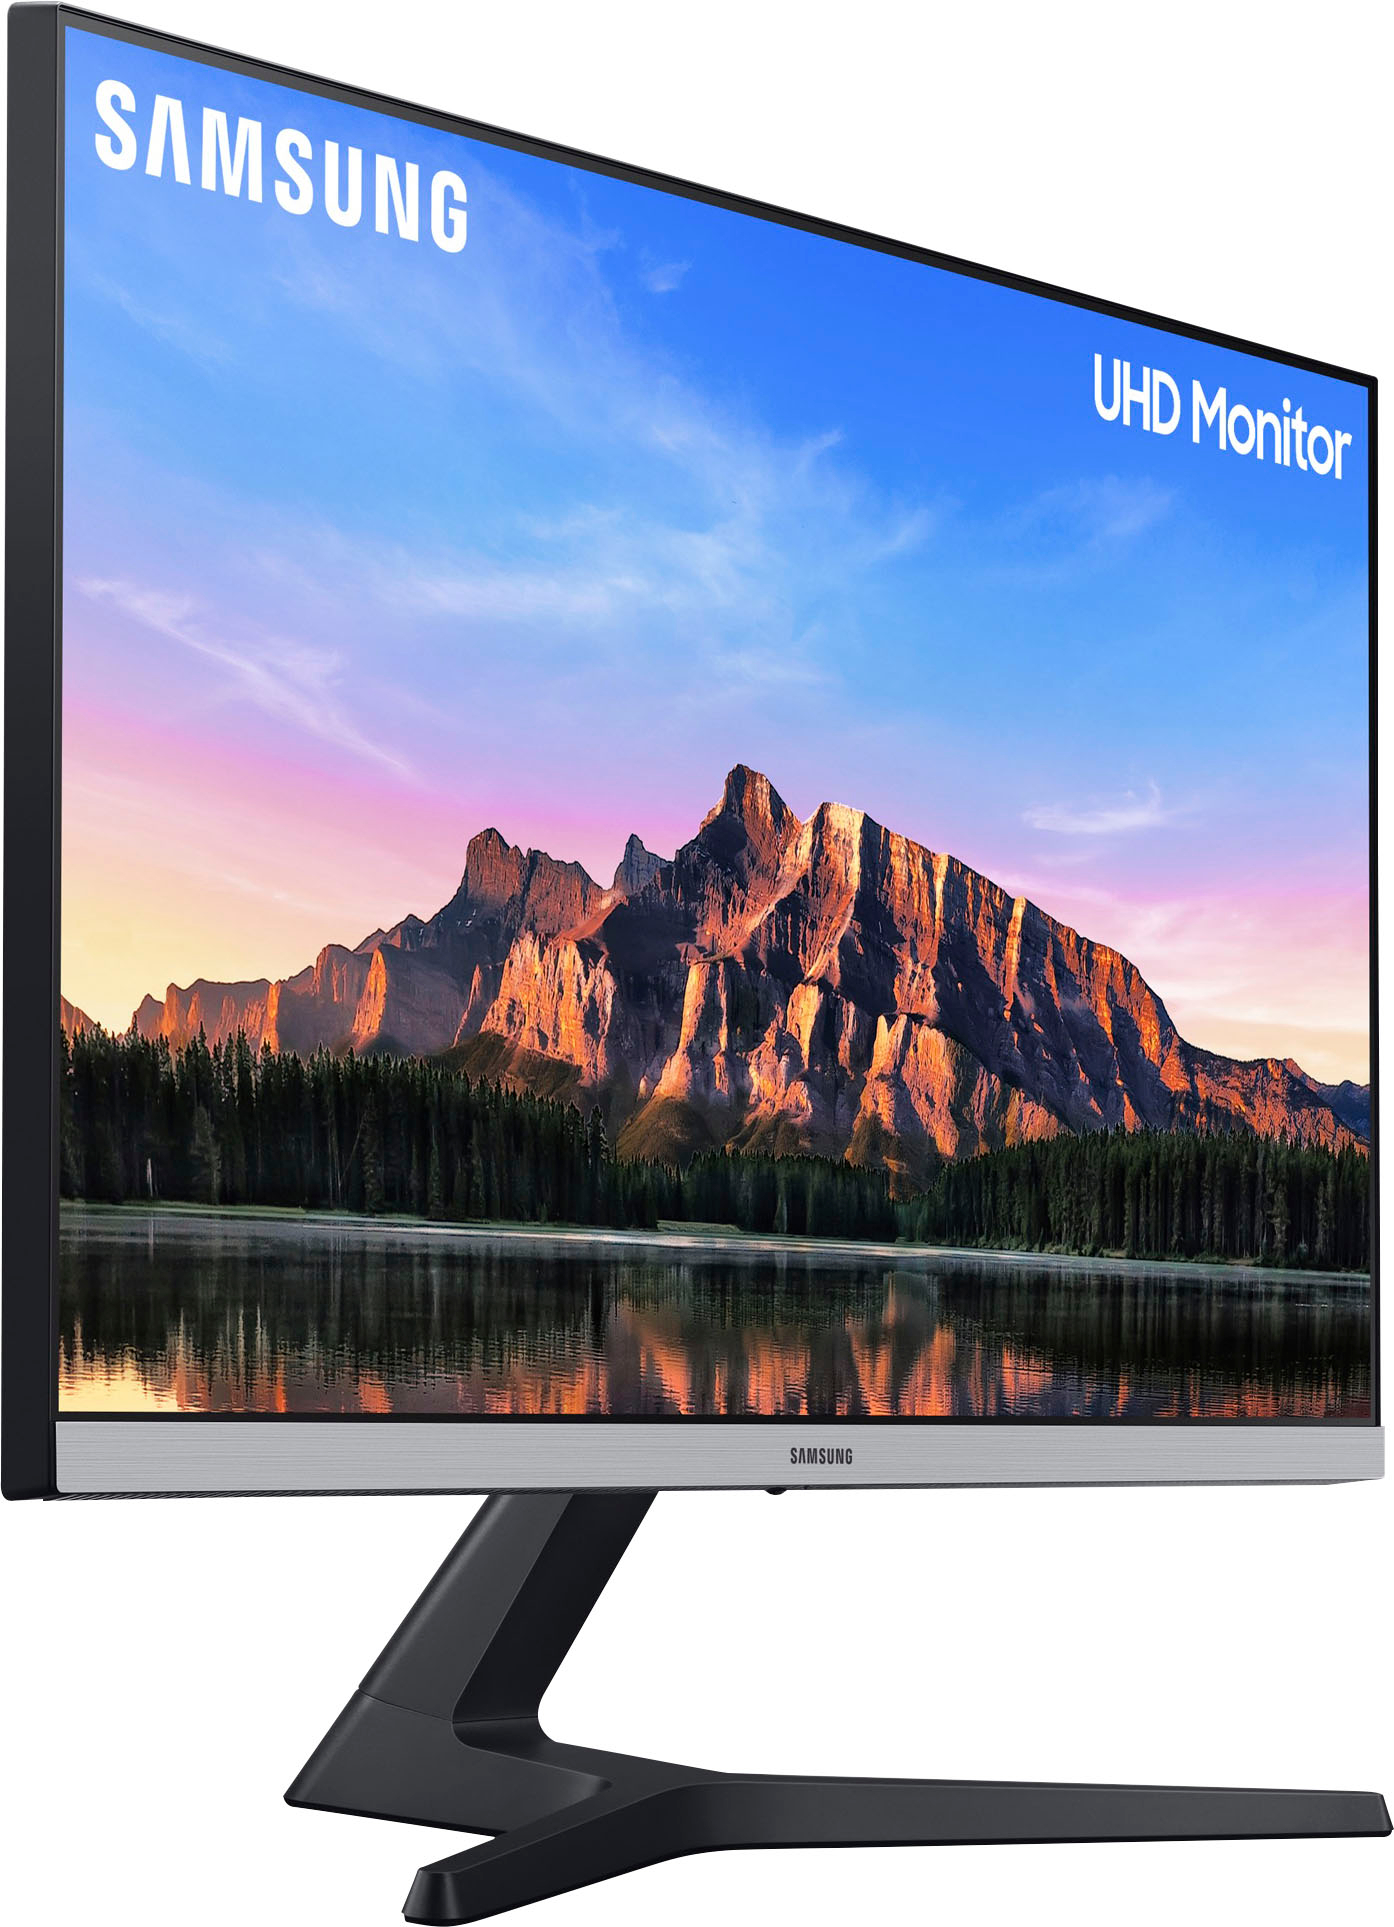 Angle View: Samsung - 28” 4K UHD IPS AMD FreeSync HDR Monitor - Black